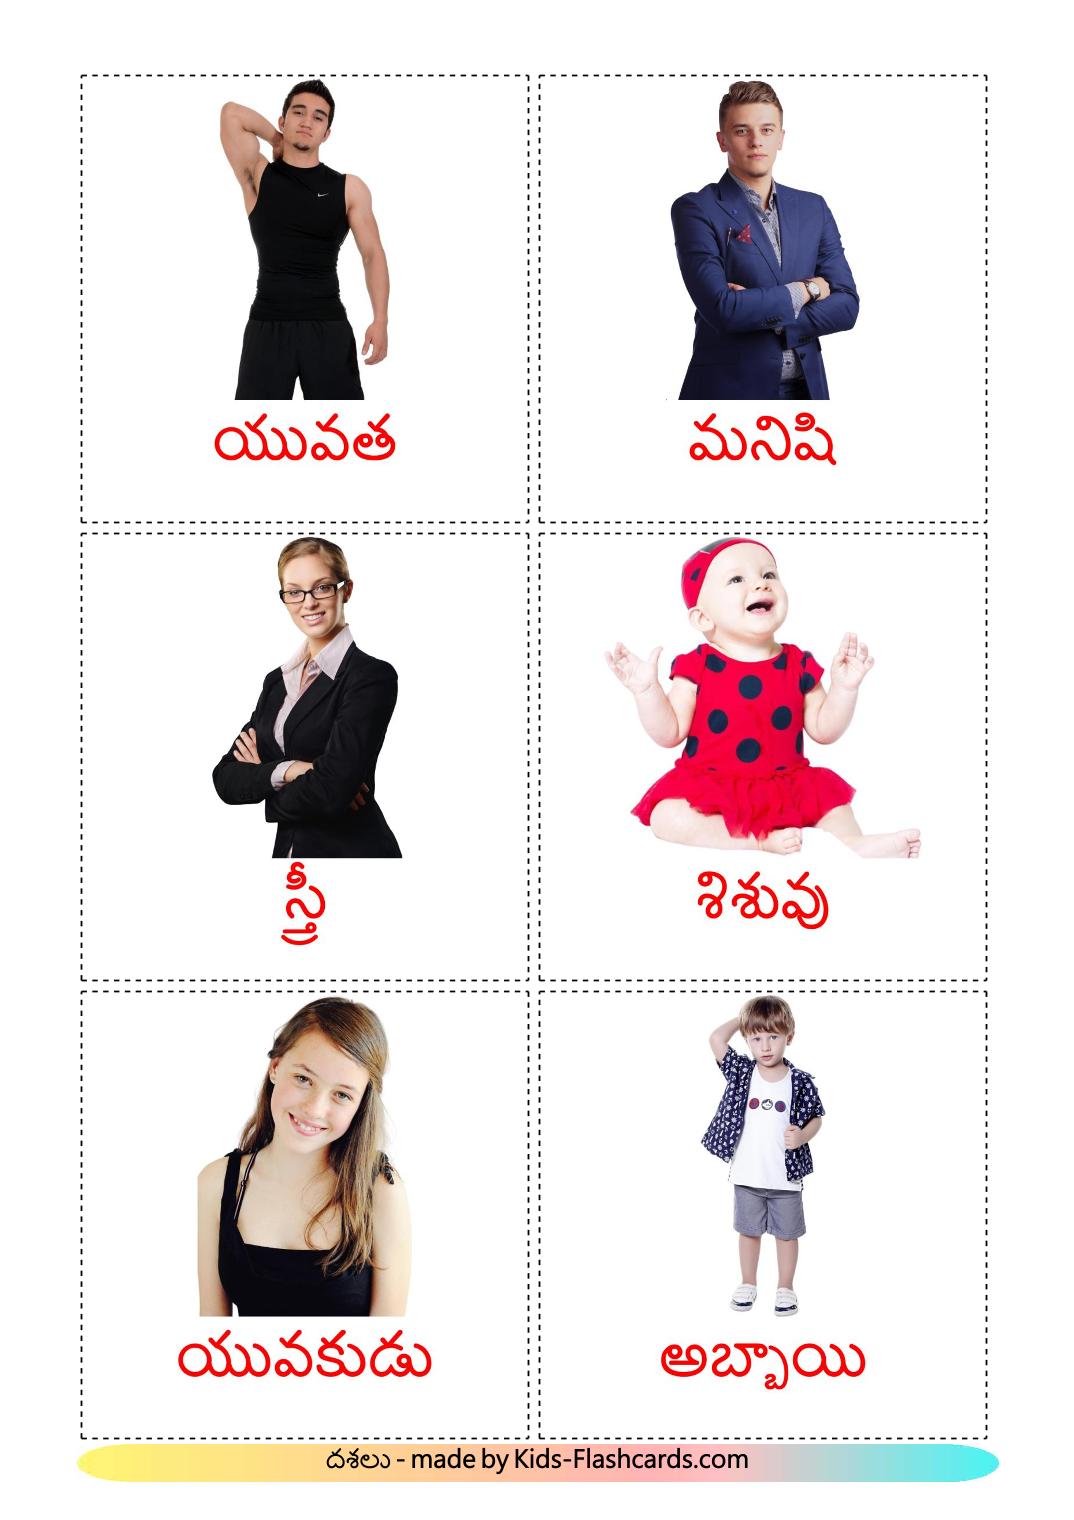 Stufe - 12 kostenlose, druckbare Telugu Flashcards 